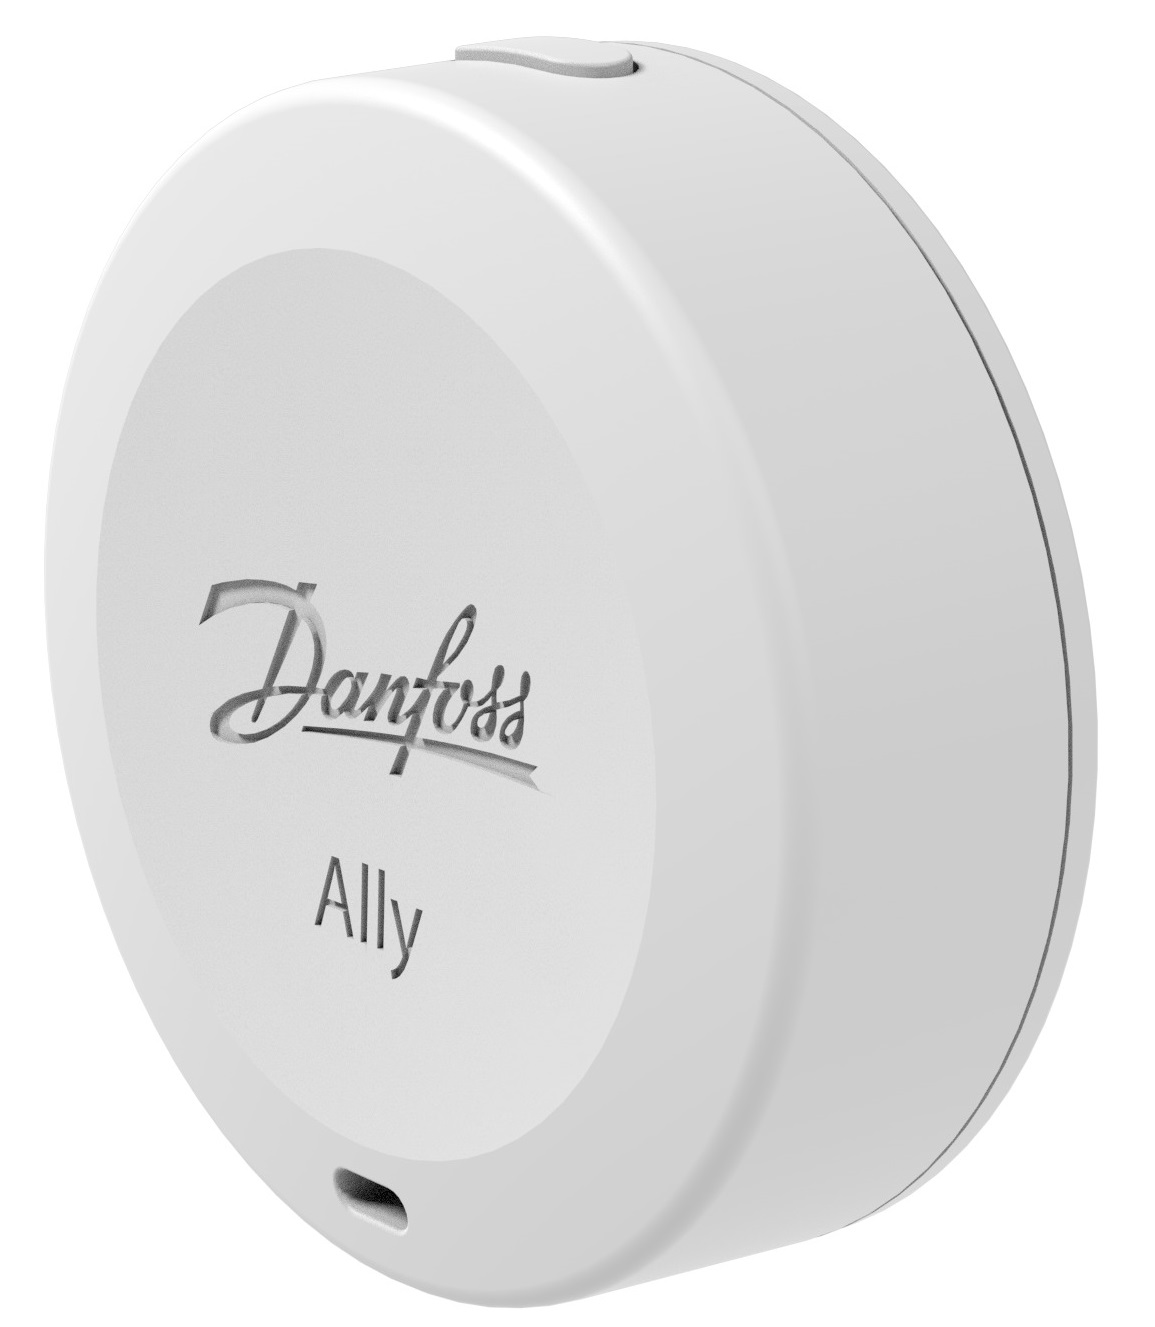 Датчик температуры Danfoss Ally Room Sensor (014G2480) цена 1864.00 грн - фотография 2